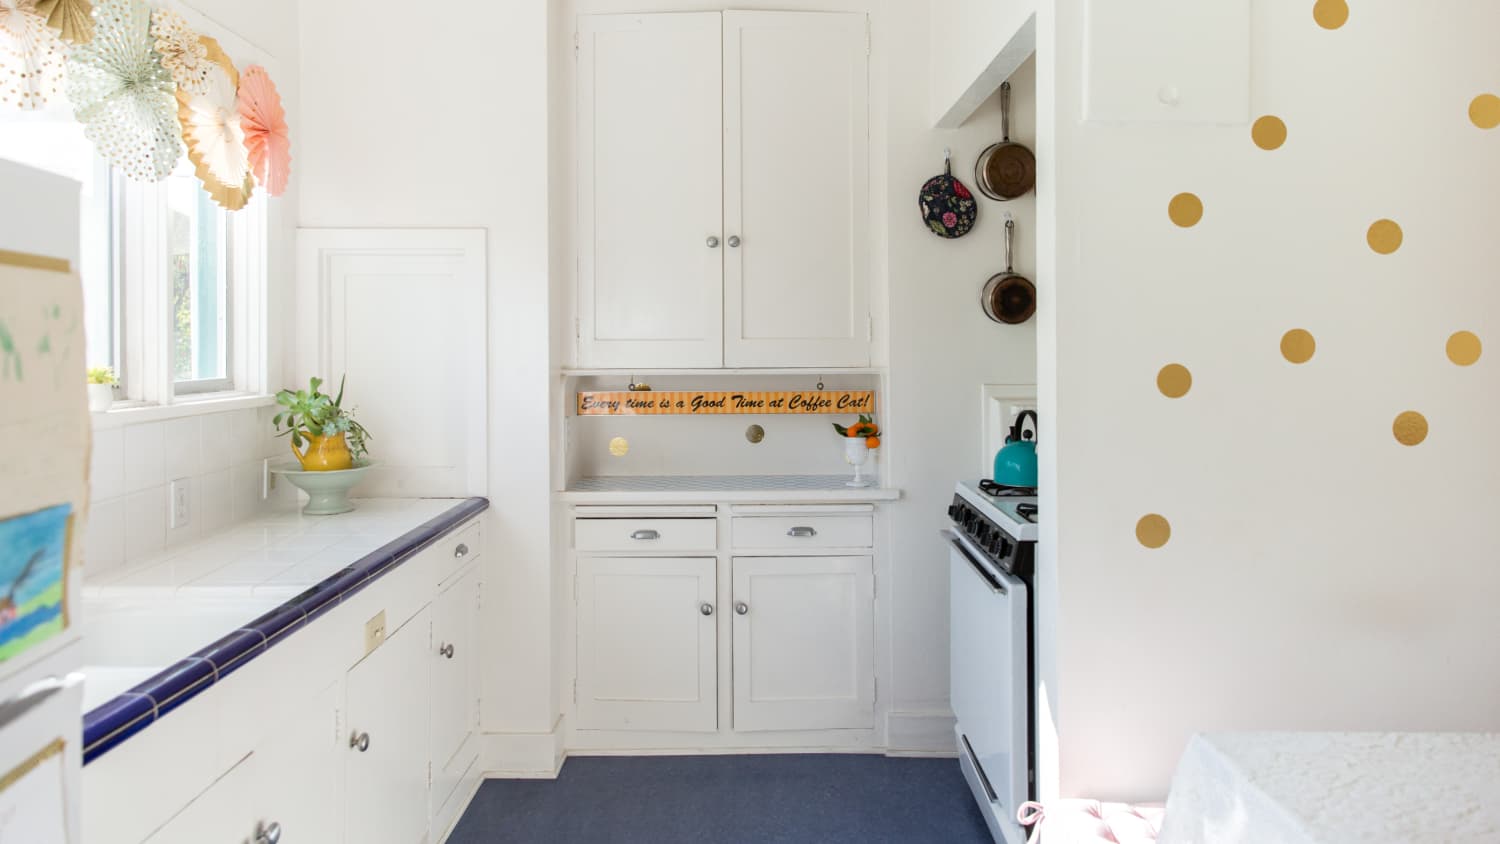 DIY Fixes for Rental Kitchen Cabinets, Appliances, Backsplashes